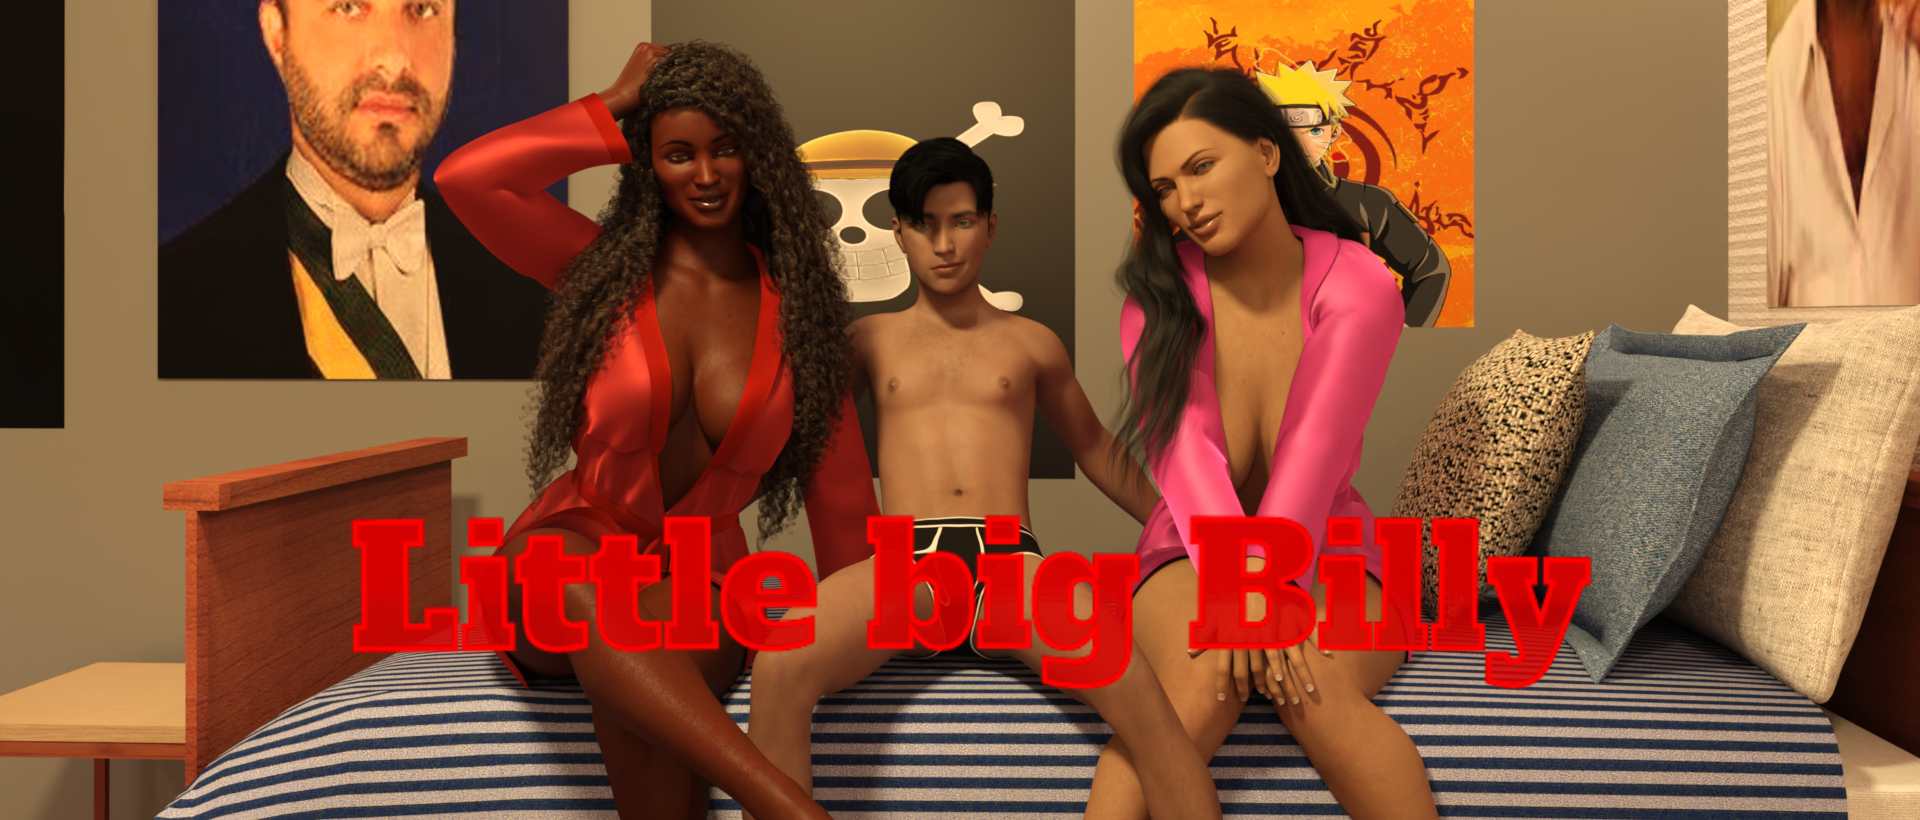 Little Big Billy [Orange juice] Adult xxx Game Download